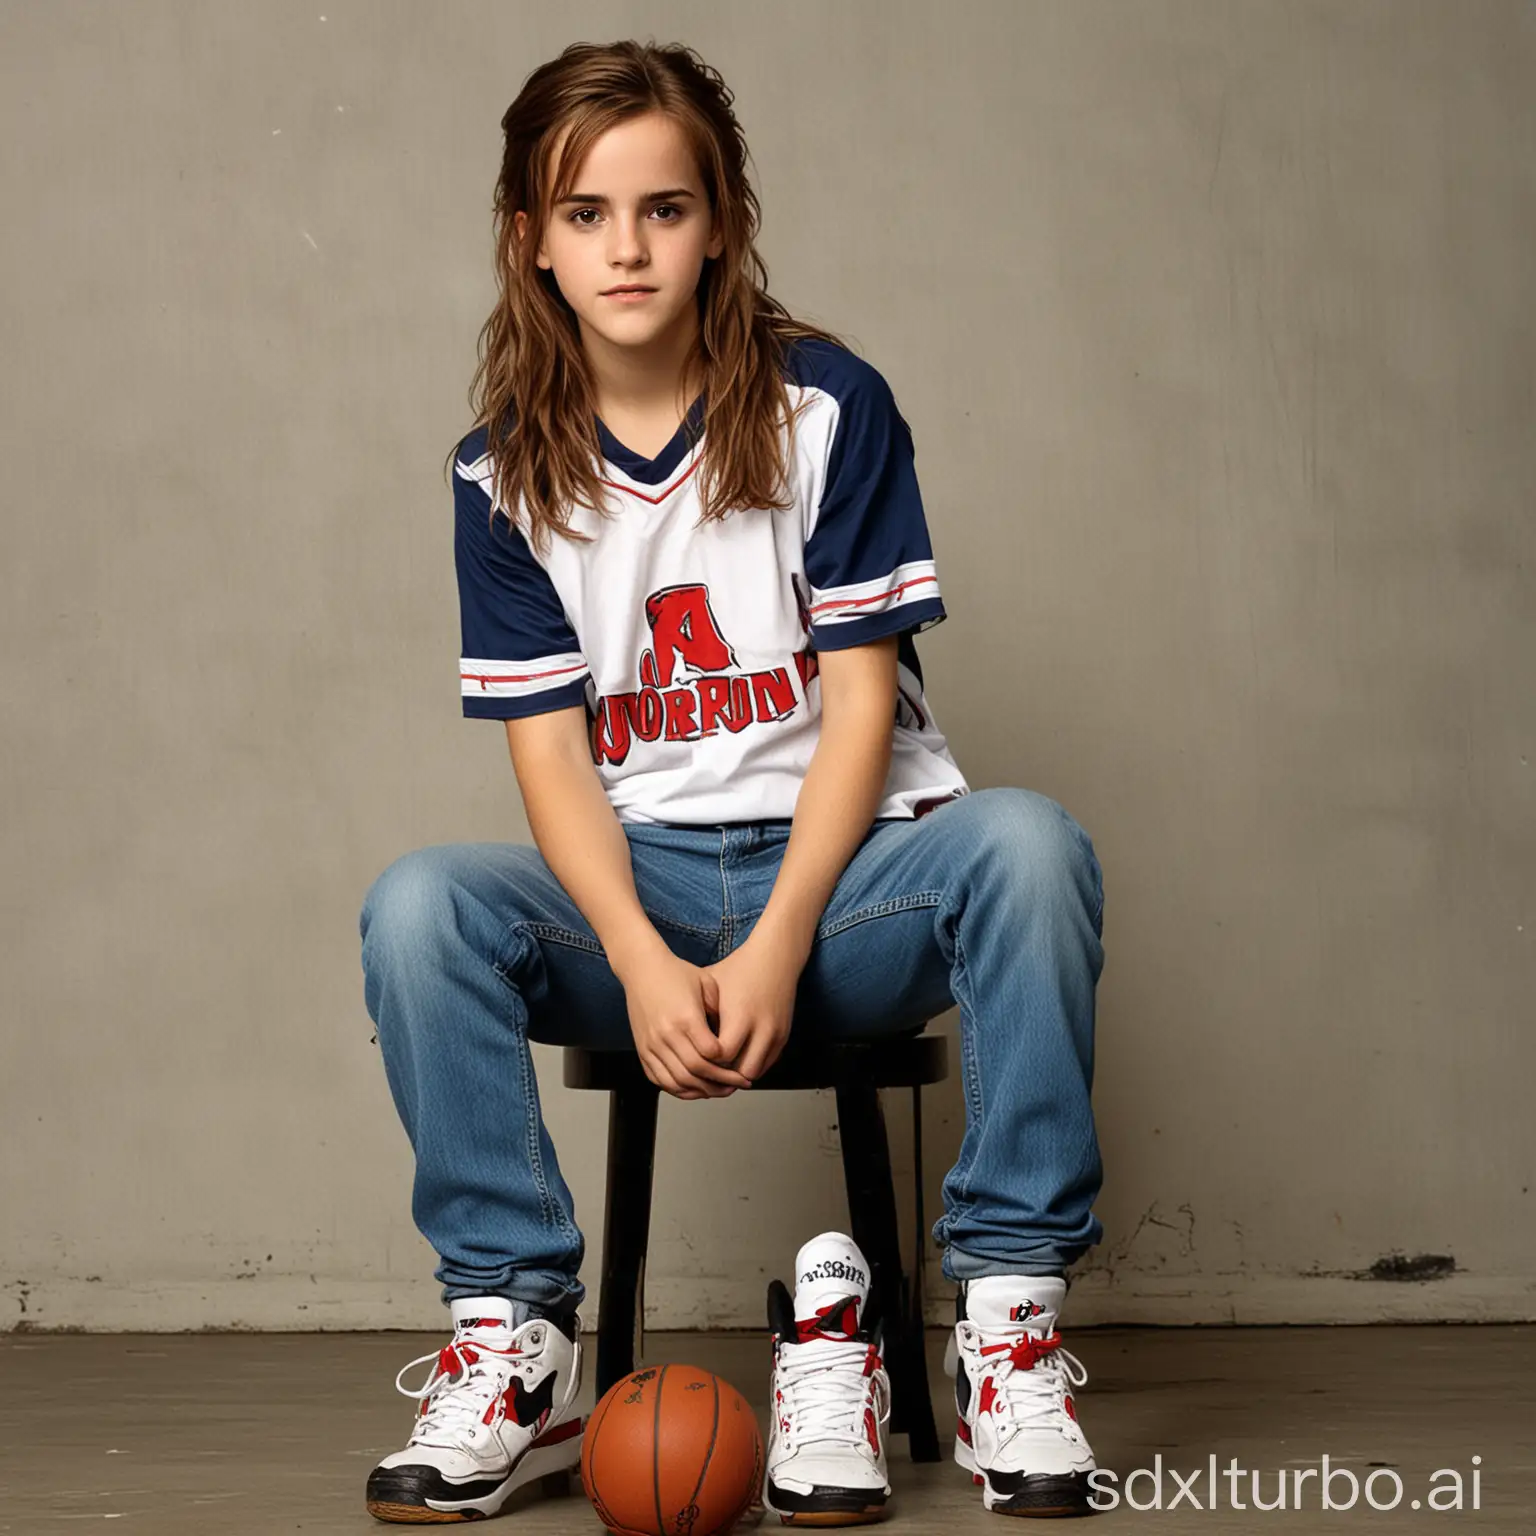 Teenage-Basketball-Player-Emma-Watson-in-Blue-Jeans-and-Jordan-Sneakers